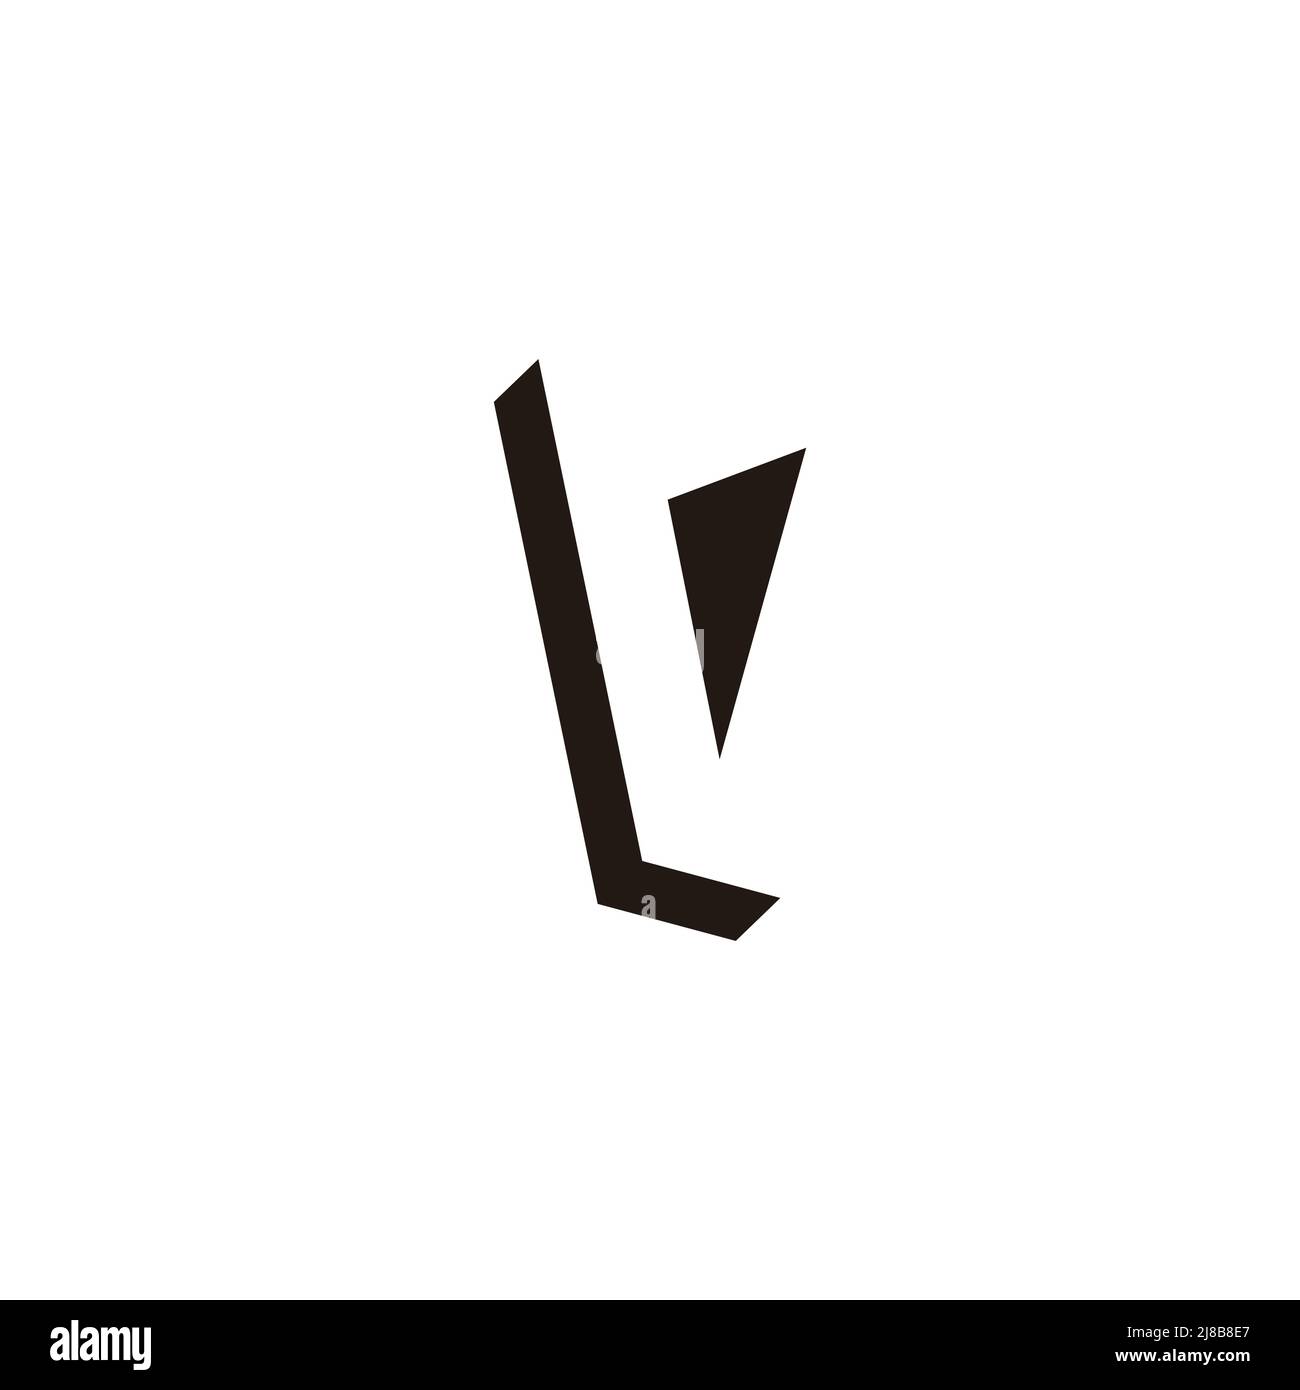 Lv logo Black and White Stock Photos & Images - Alamy